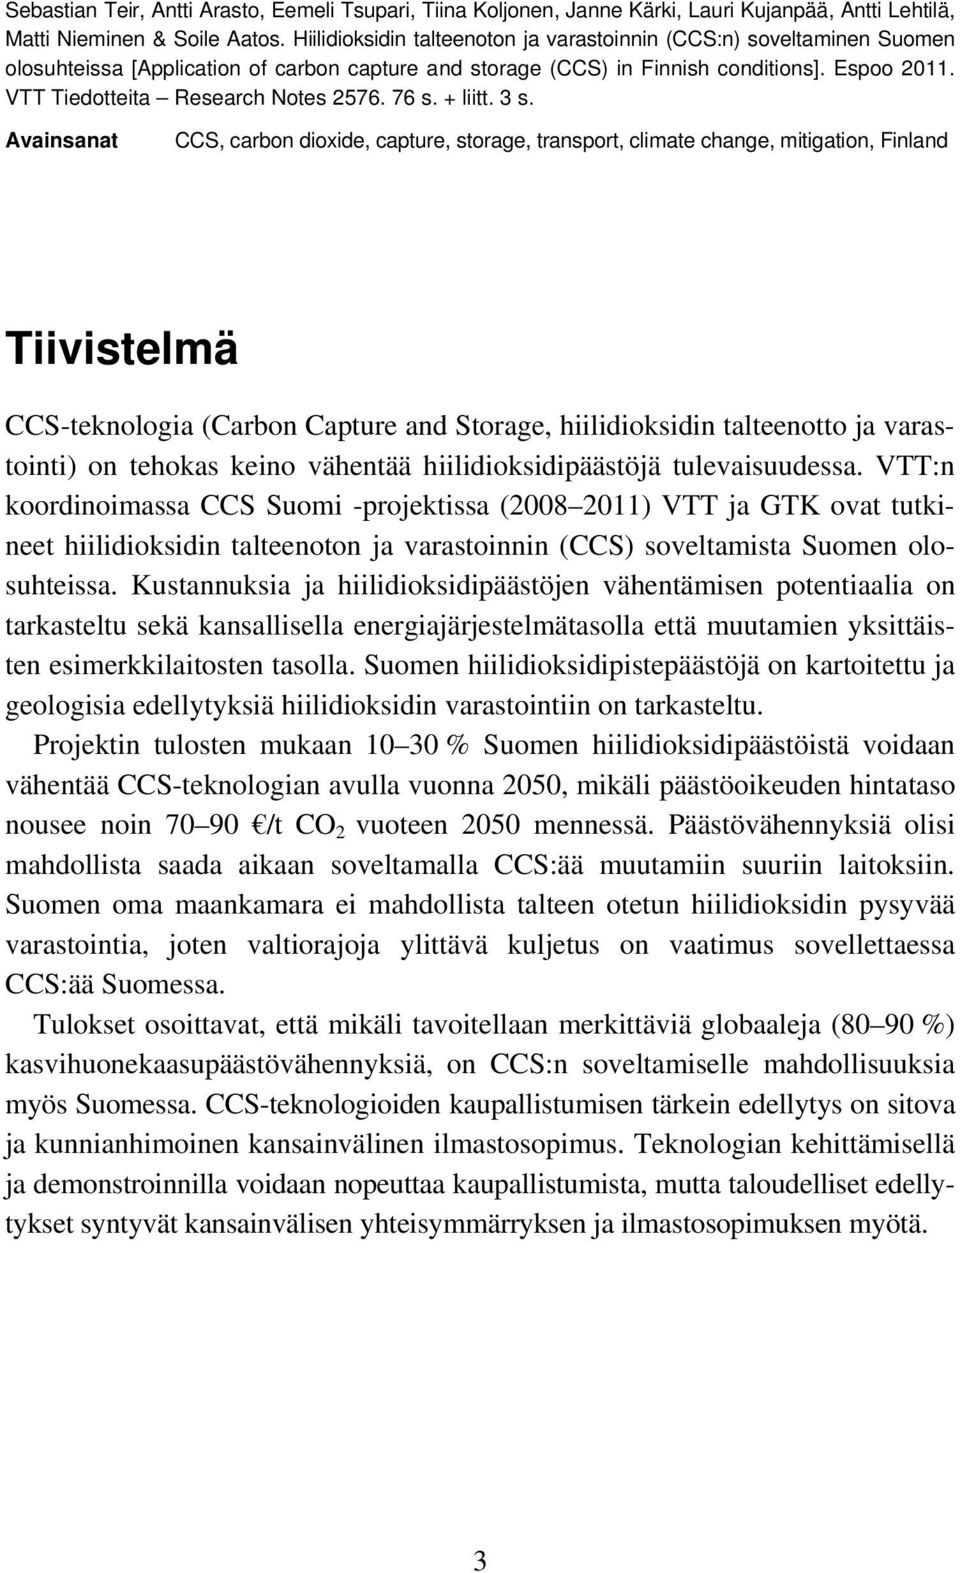 VTT Tiedotteita Research Notes 2576. 76 s. + liitt. 3 s.